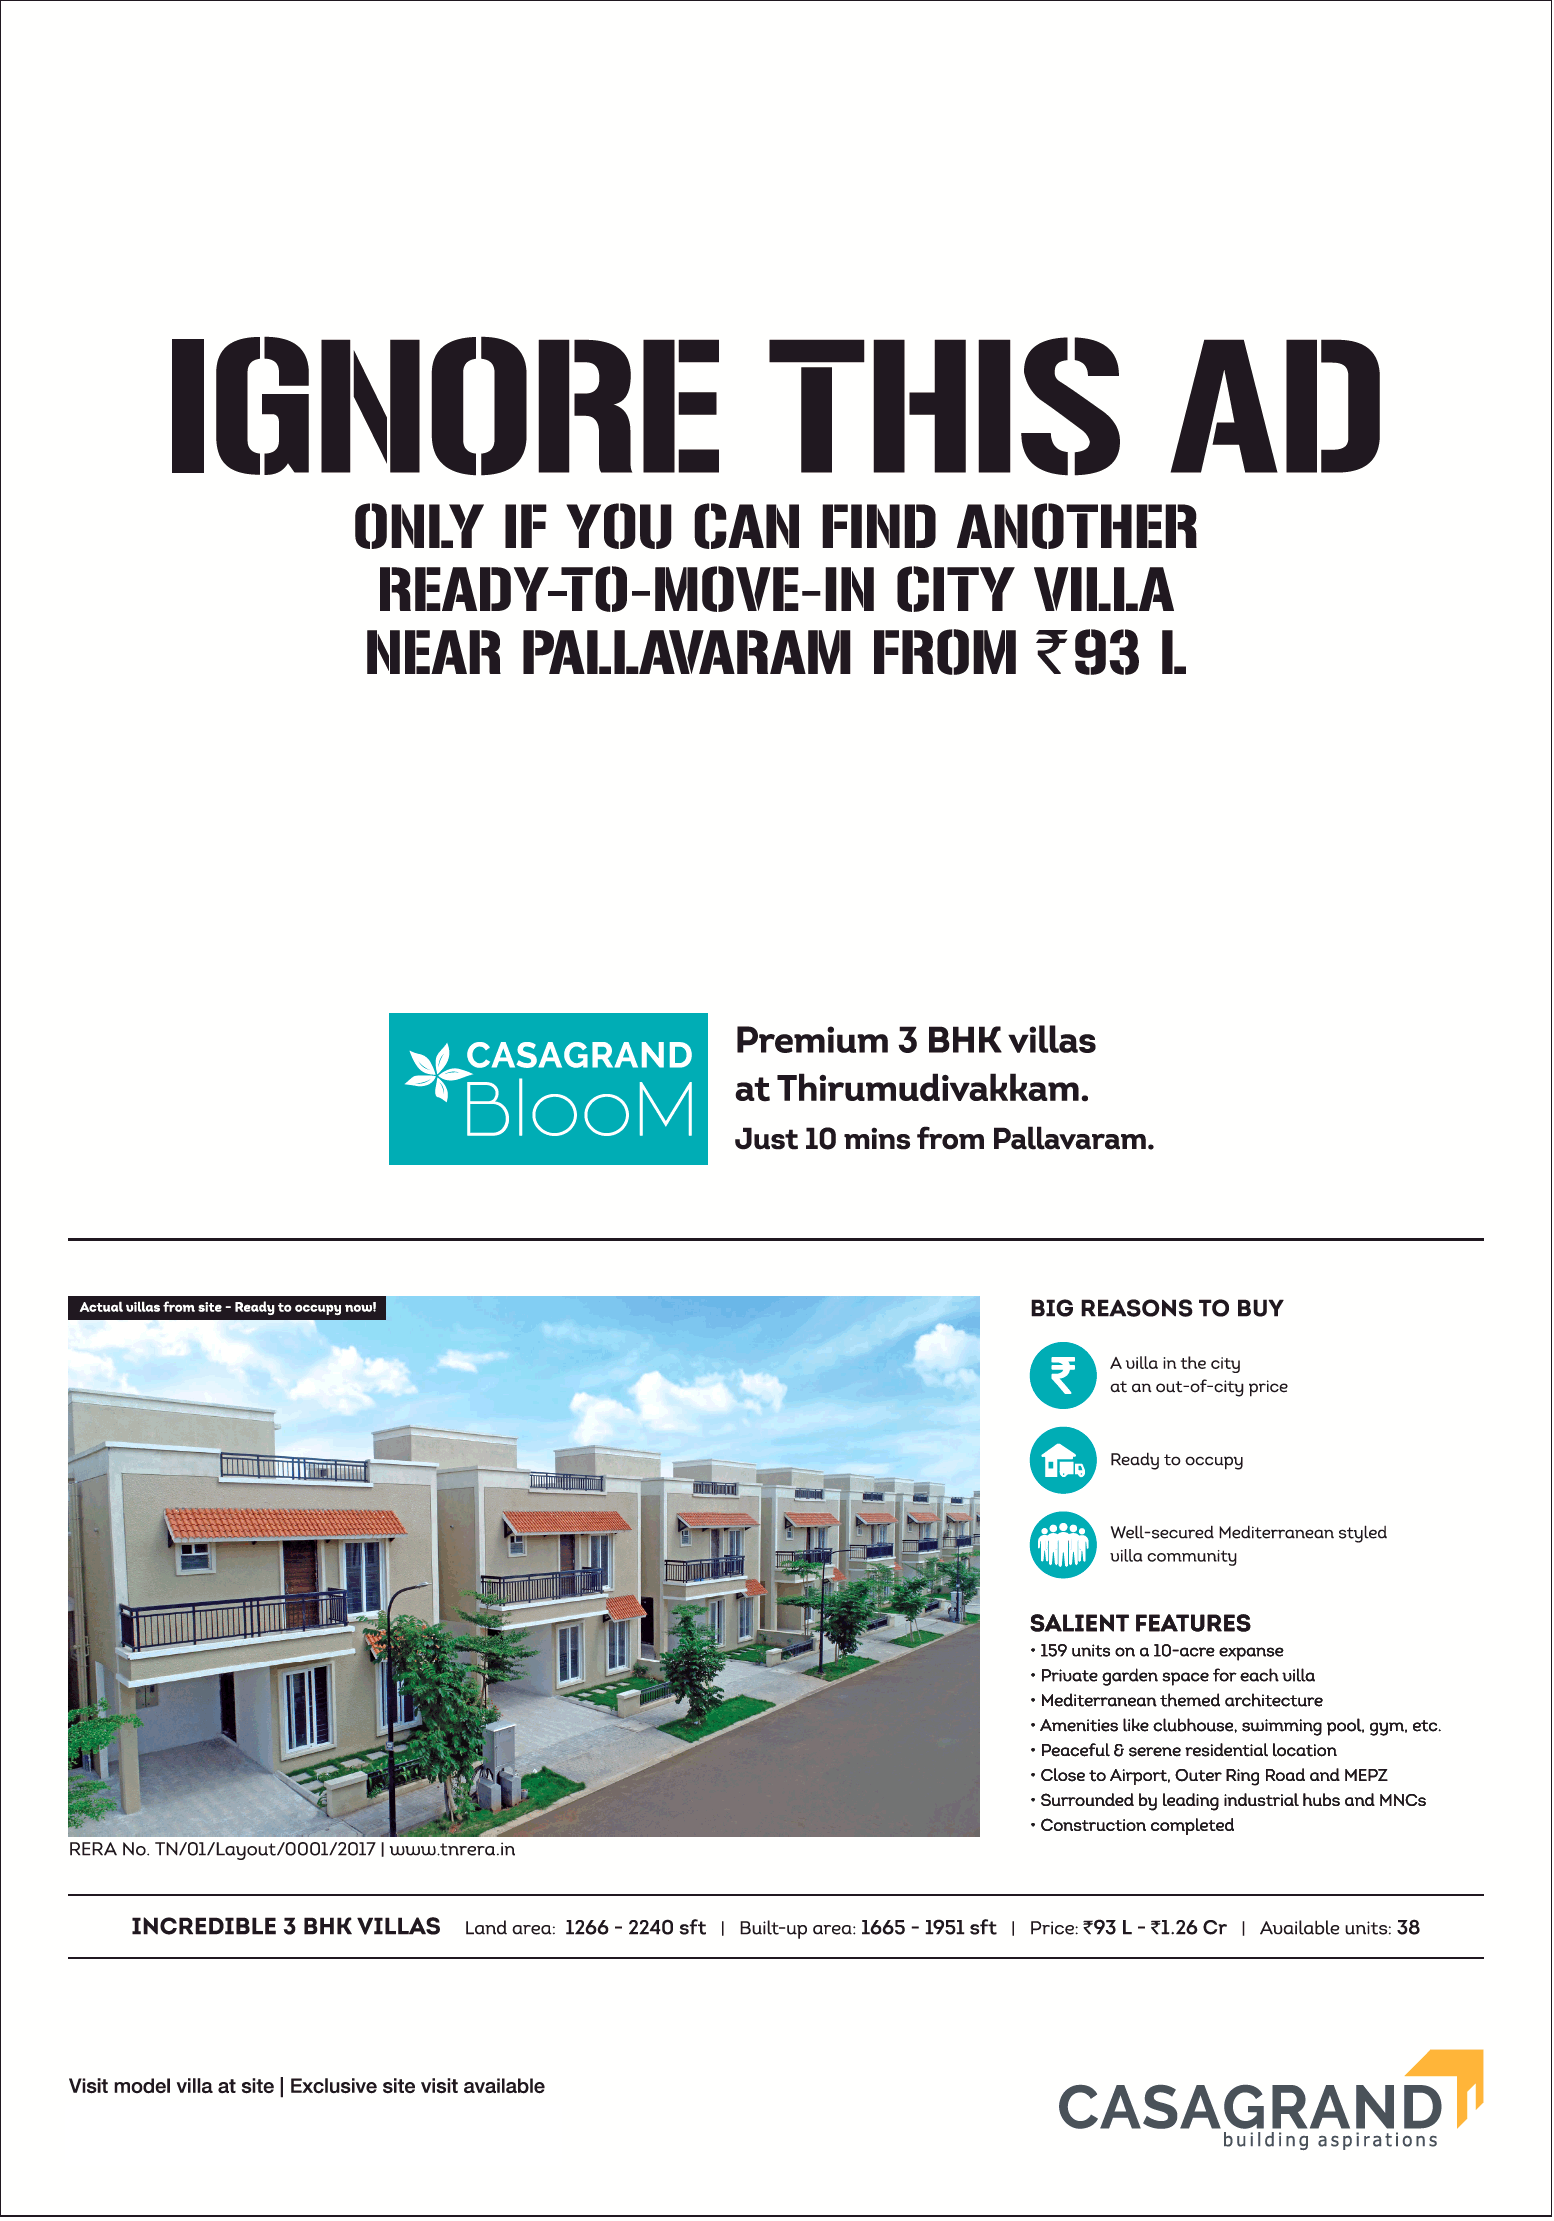 Premium 3 BHK villas Rs 93 Lac at Casagrand Bloom in Chennai Update